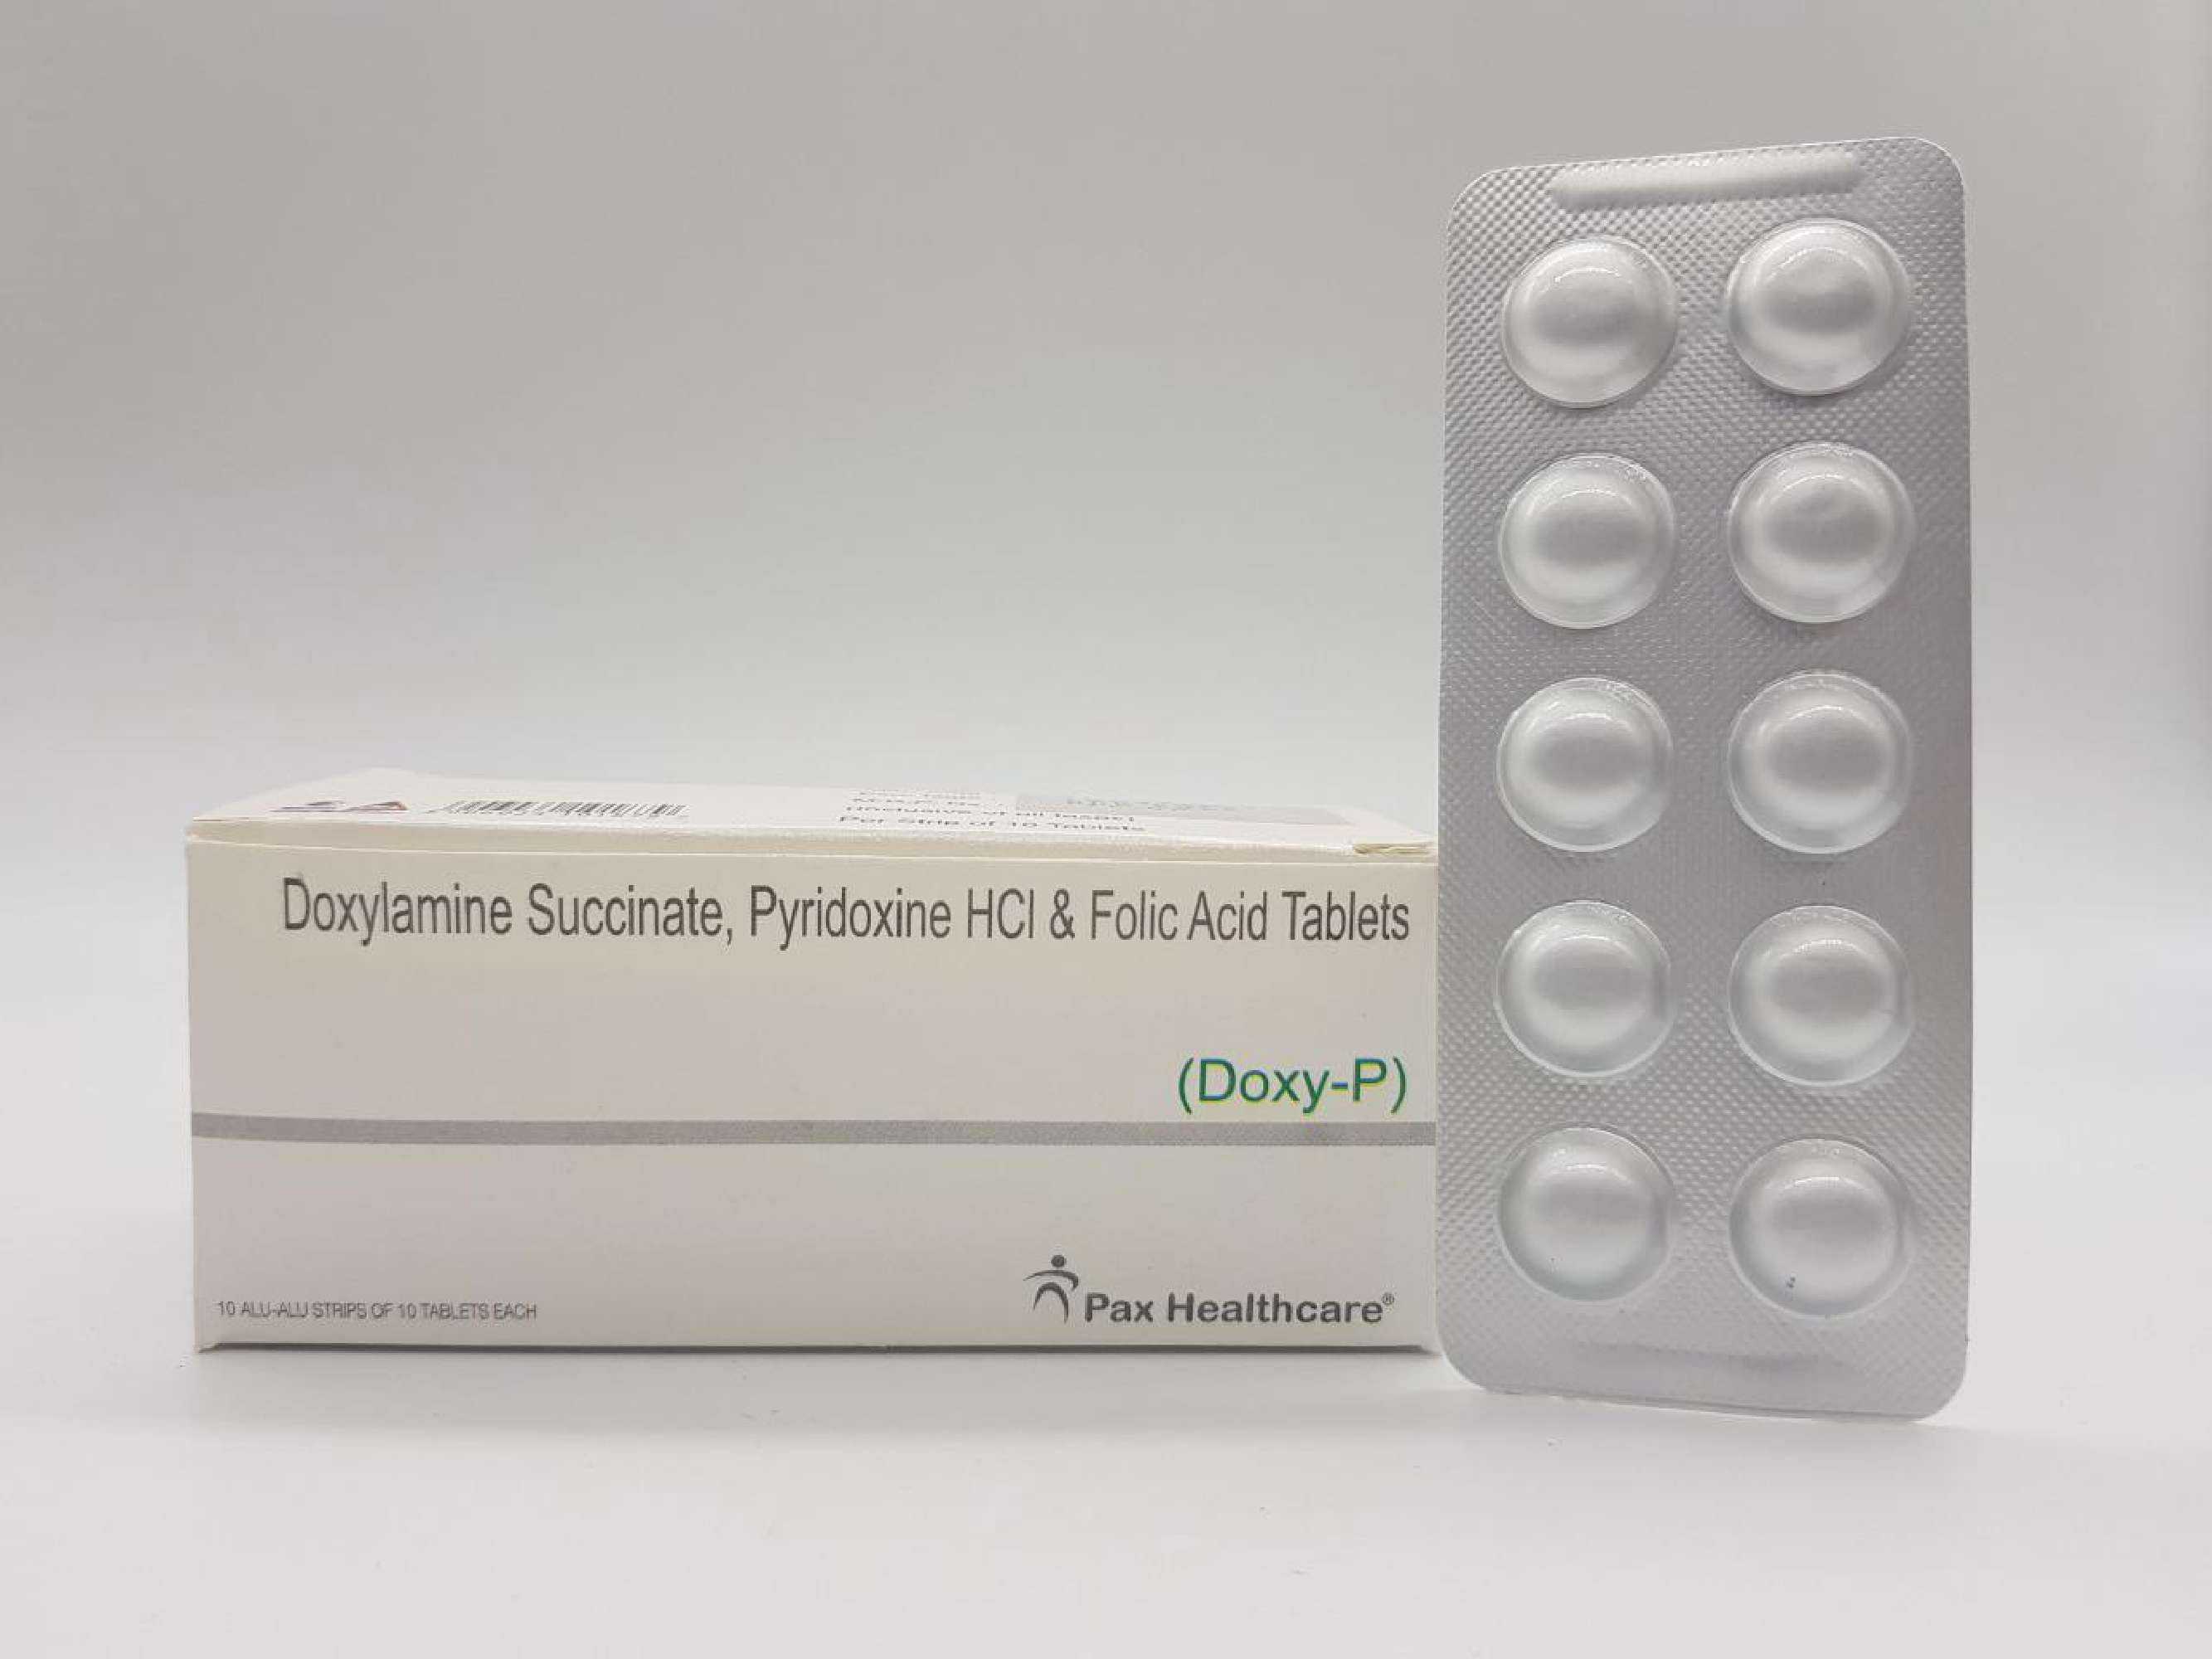 doxylamine succinate usp 20mg, pyridoxine hydrochloride ip 20mg, folic acid ip 5mg